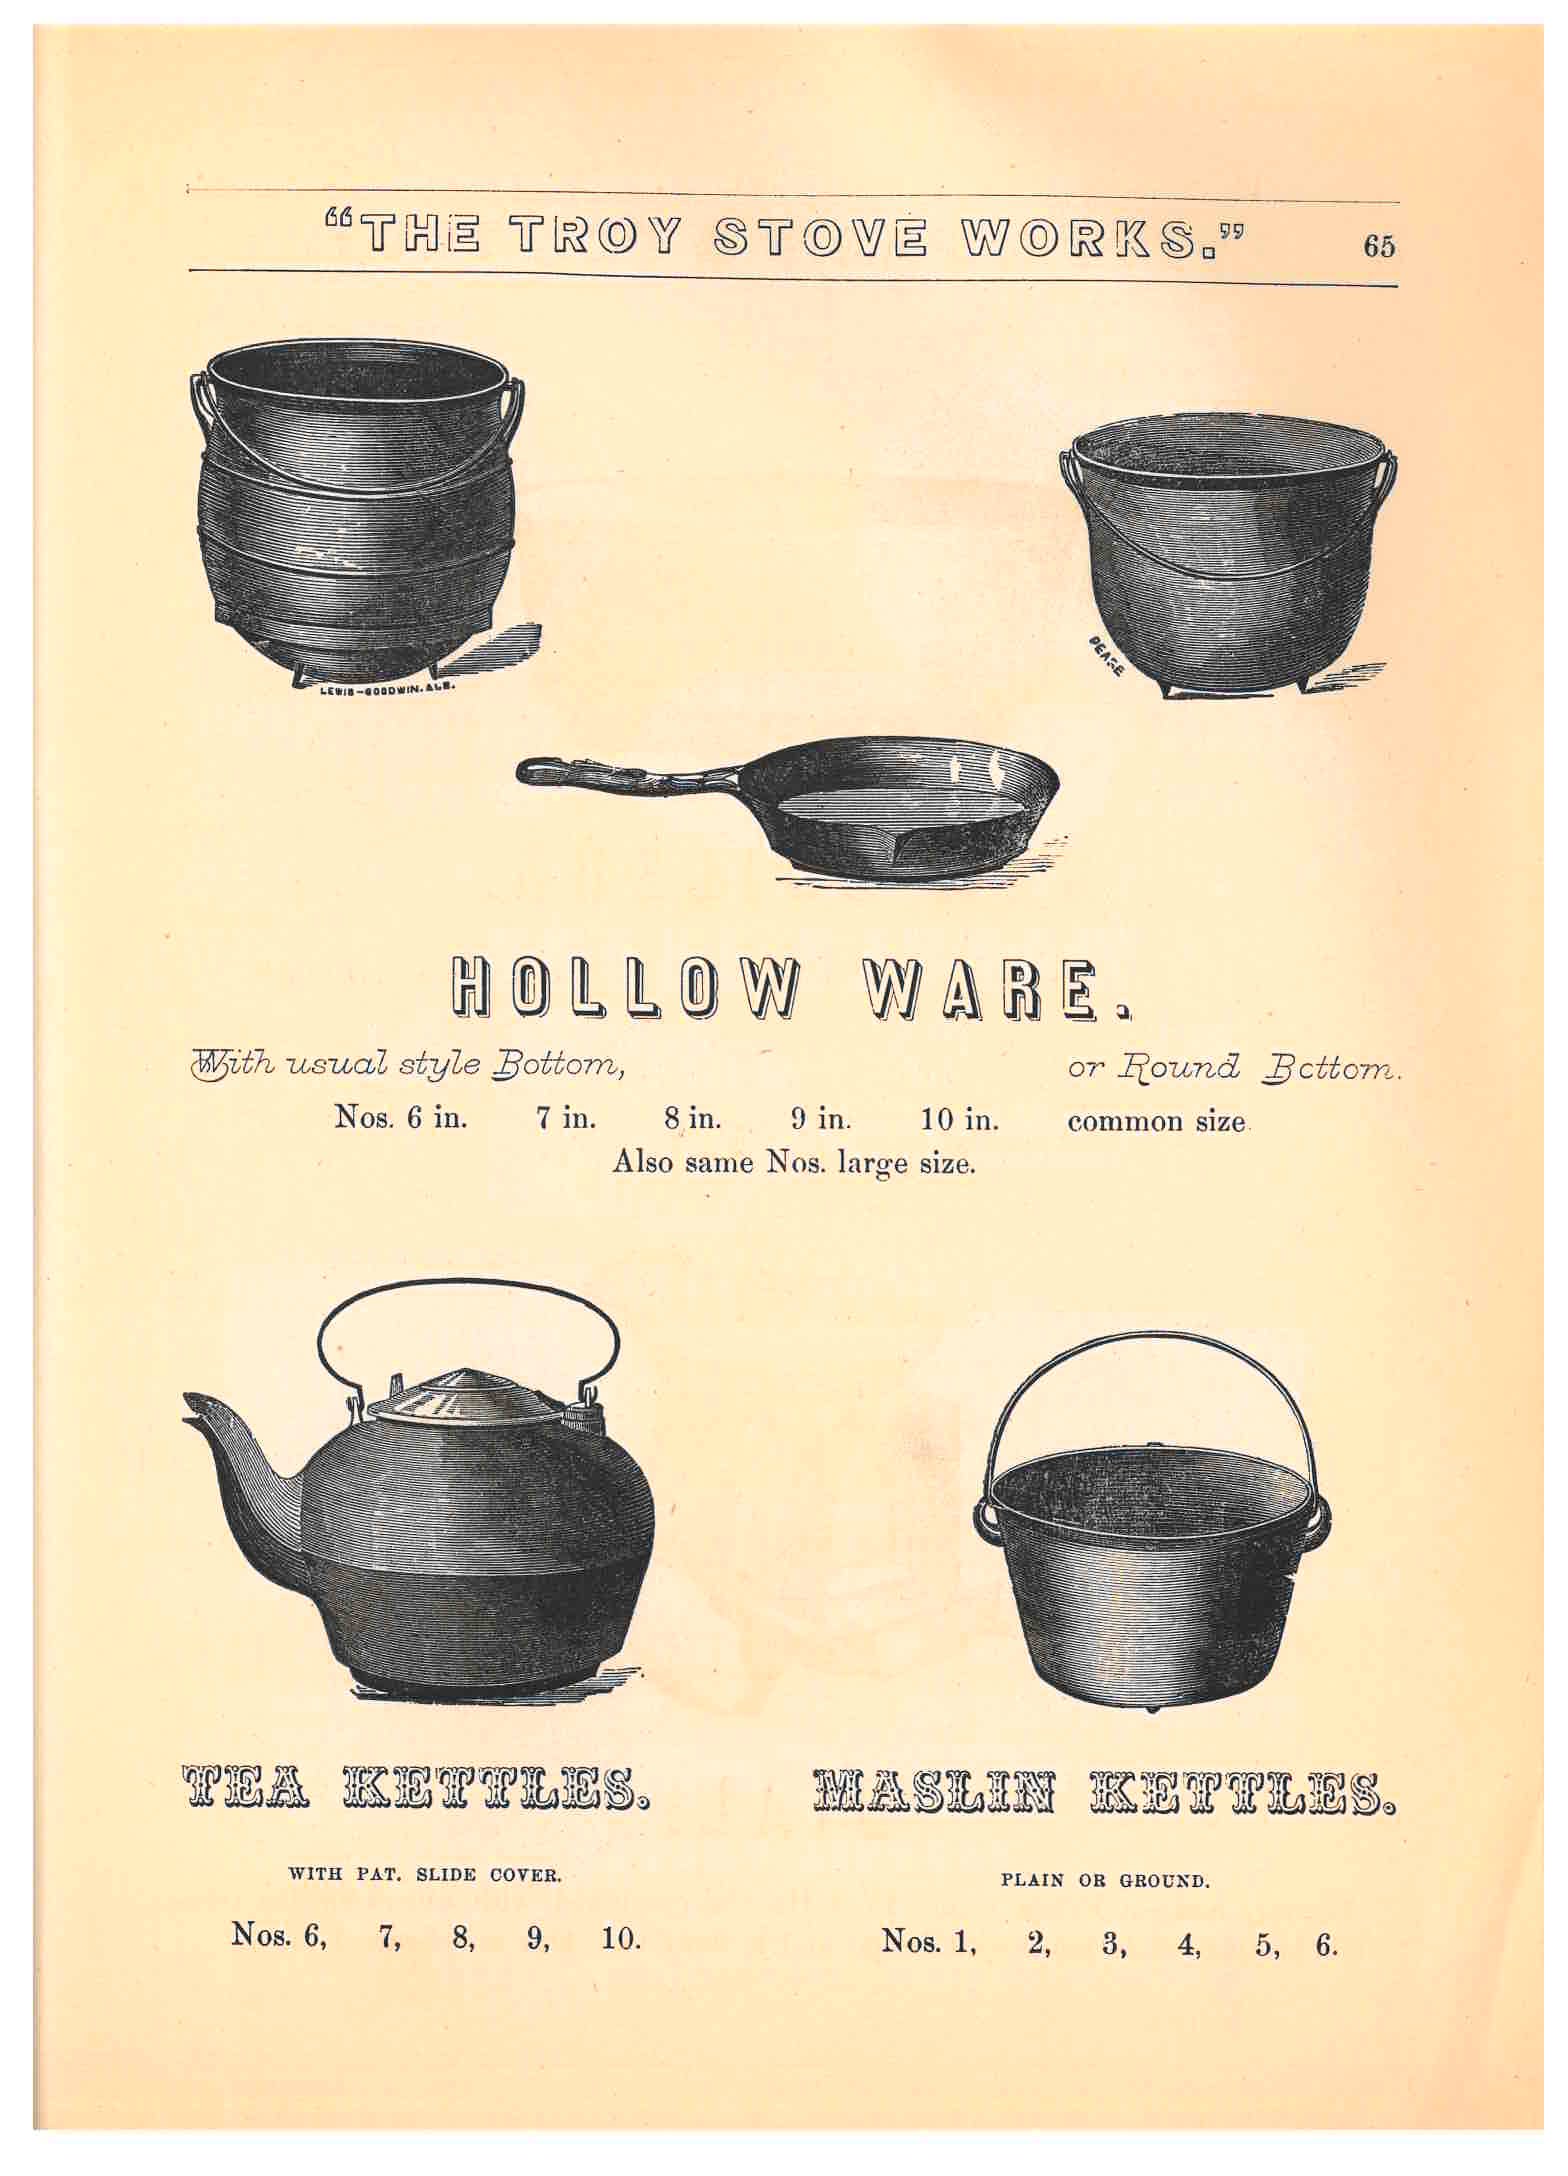 hollow ware, pots, pan, tea kettle, and maslin kettle